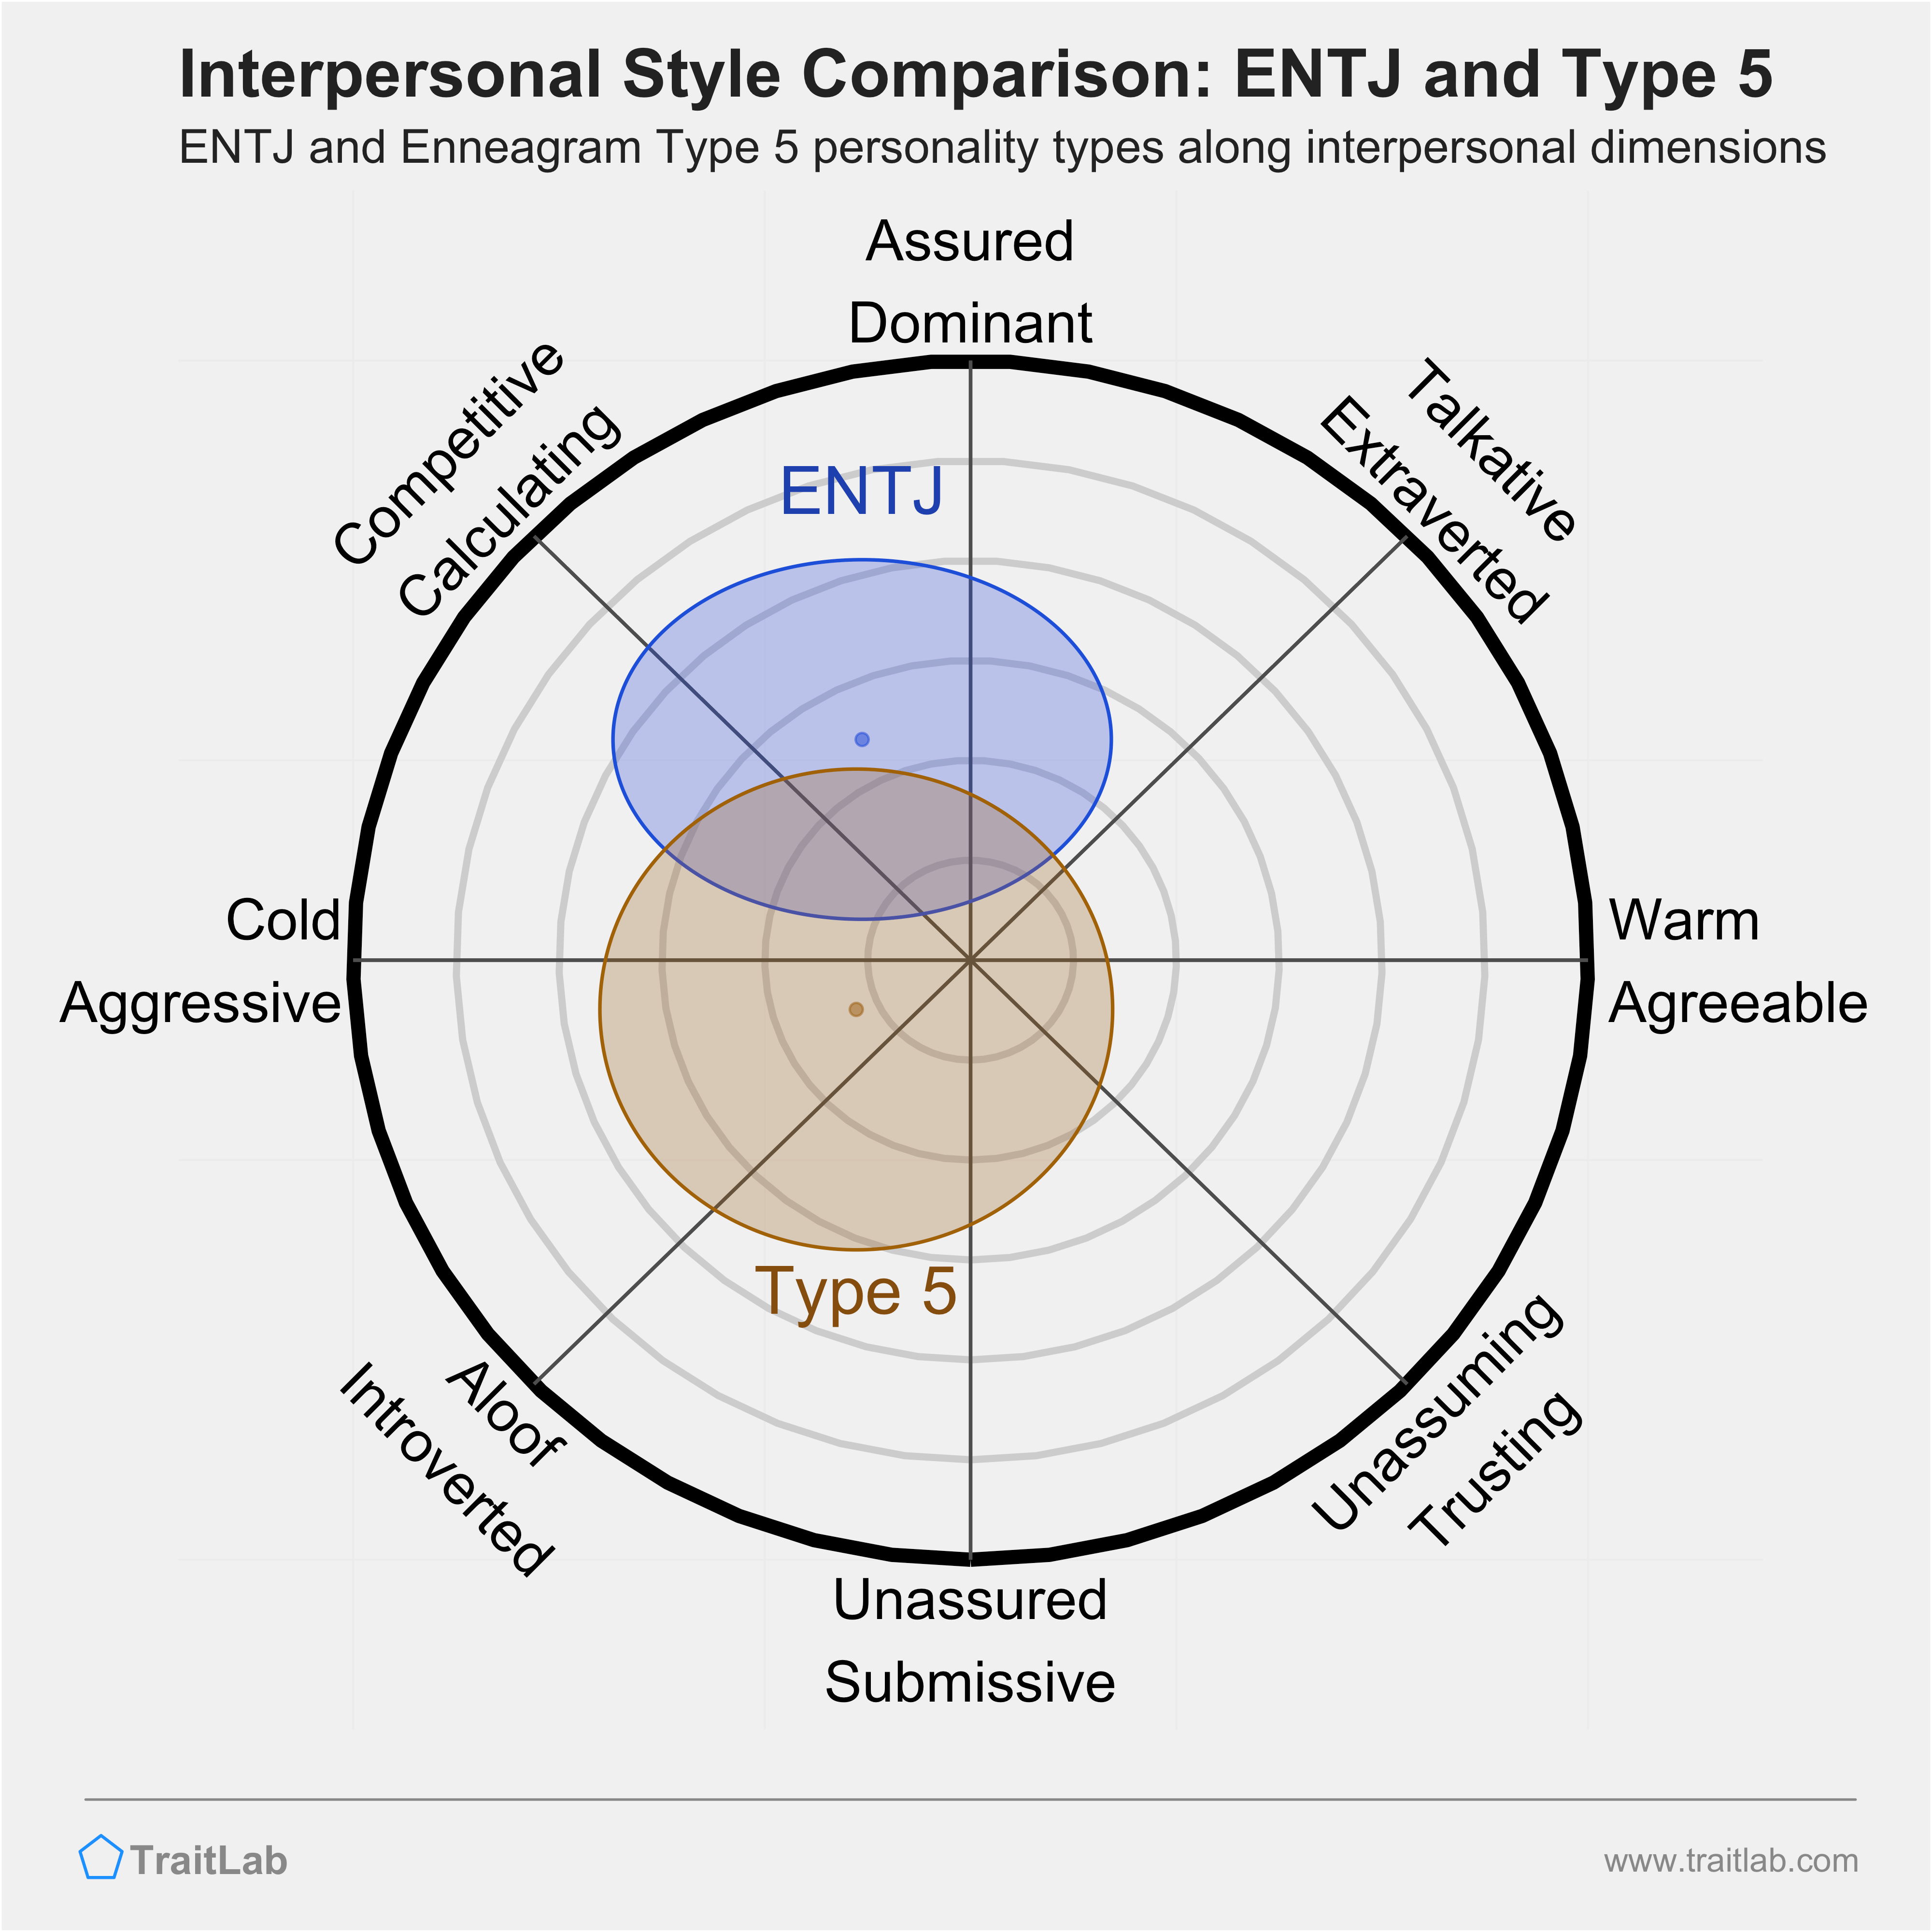 Enneagram ENTJ and Type 5 comparison across interpersonal dimensions